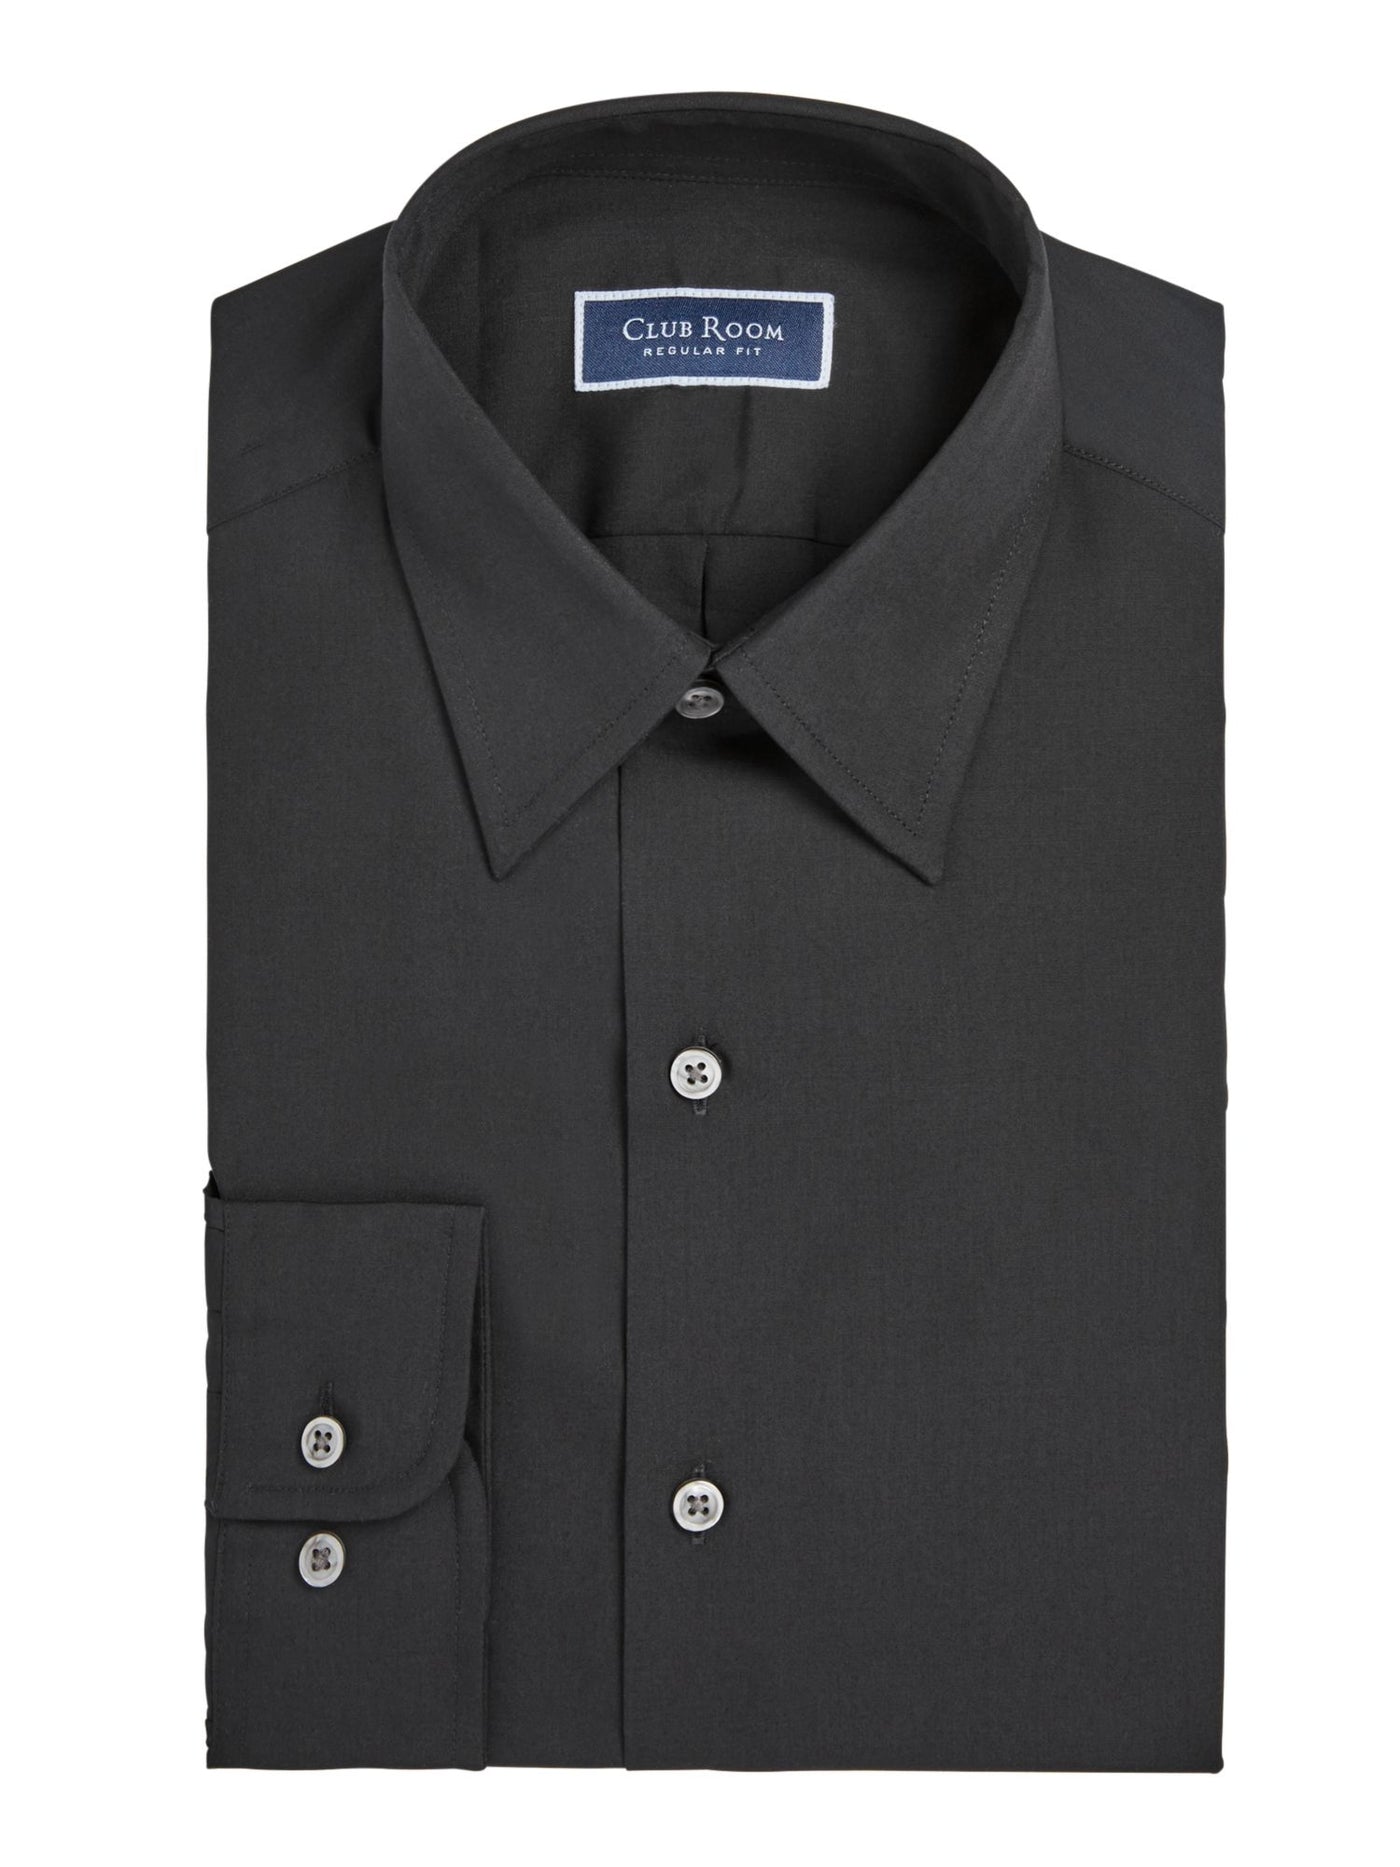 CLUBROOM Mens Black Spread Collar Classic Fit Button Down Shirt 2XL 18- 36/37